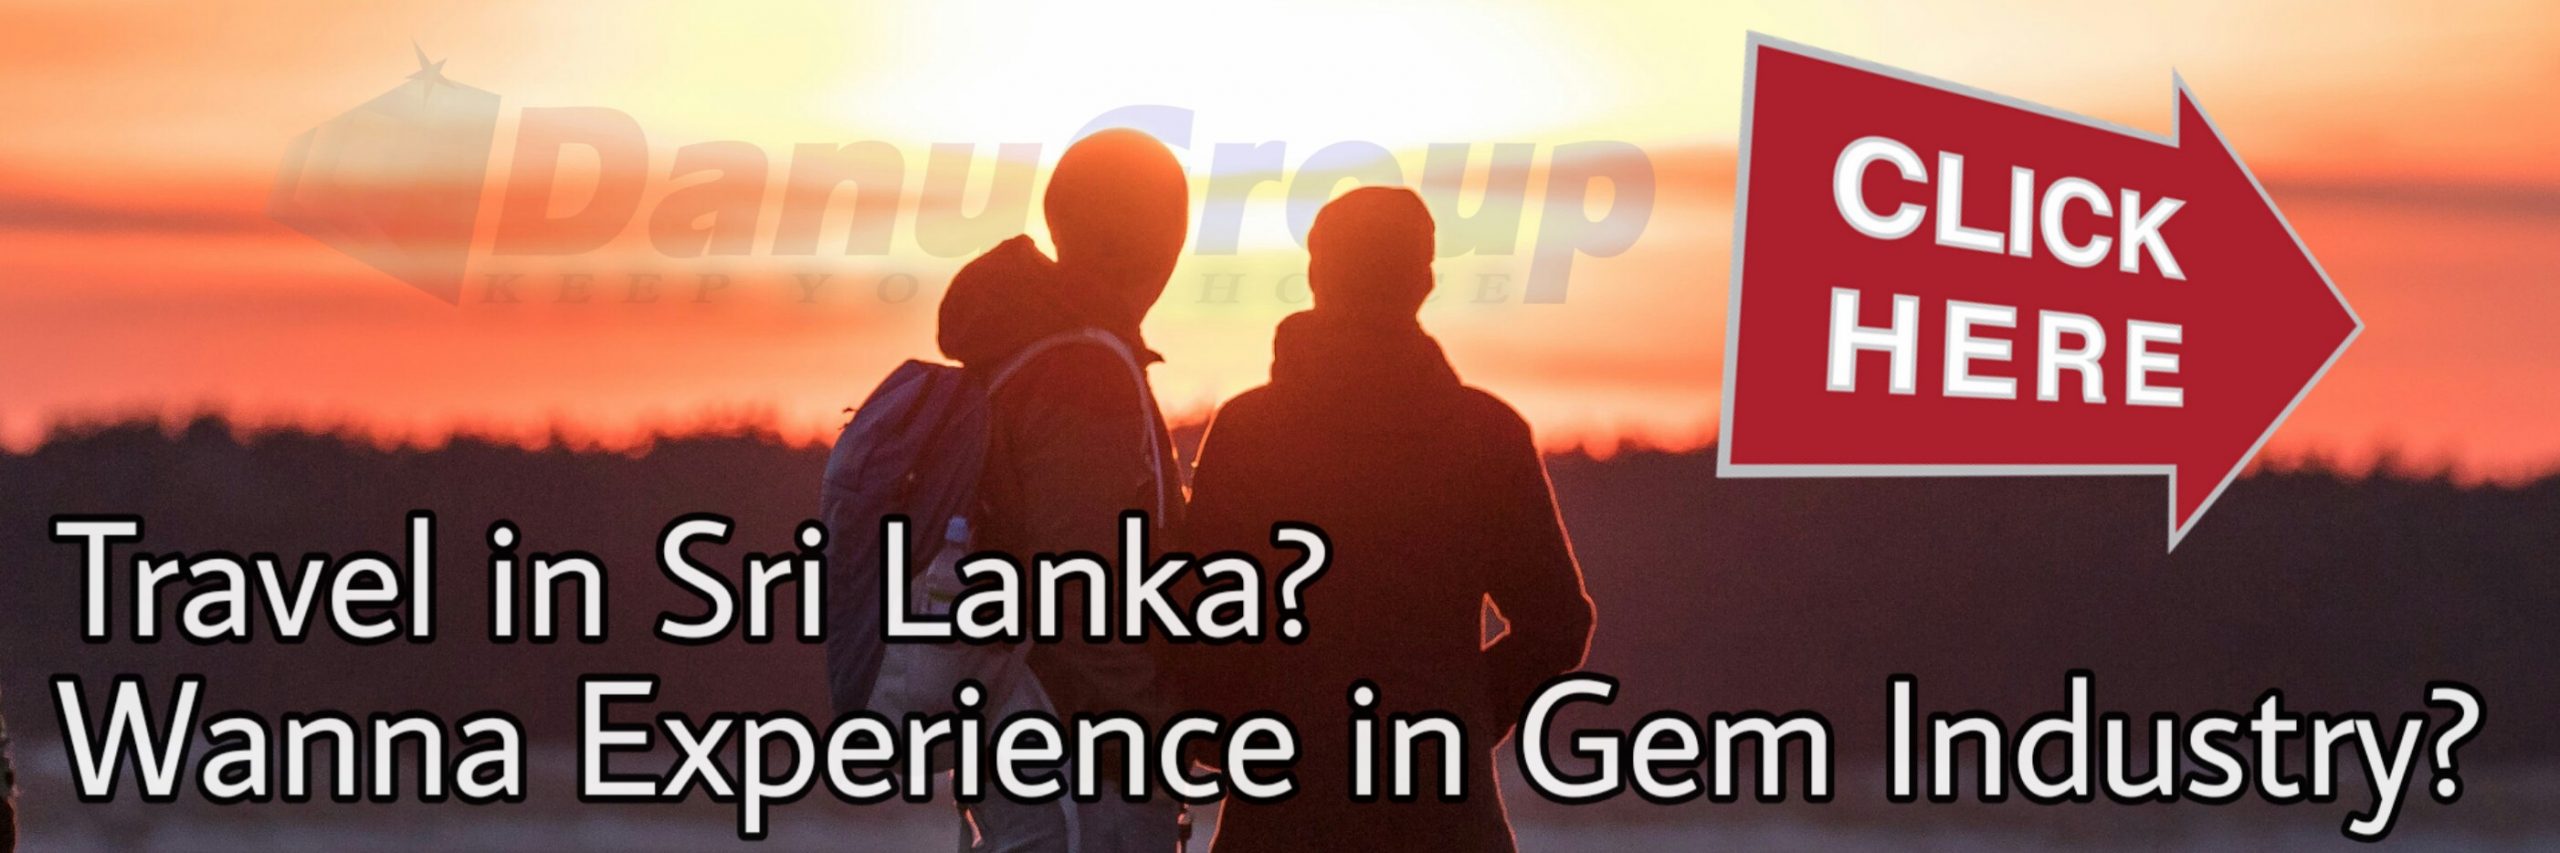 Travel in sri lanka - wanna experience in gem industry